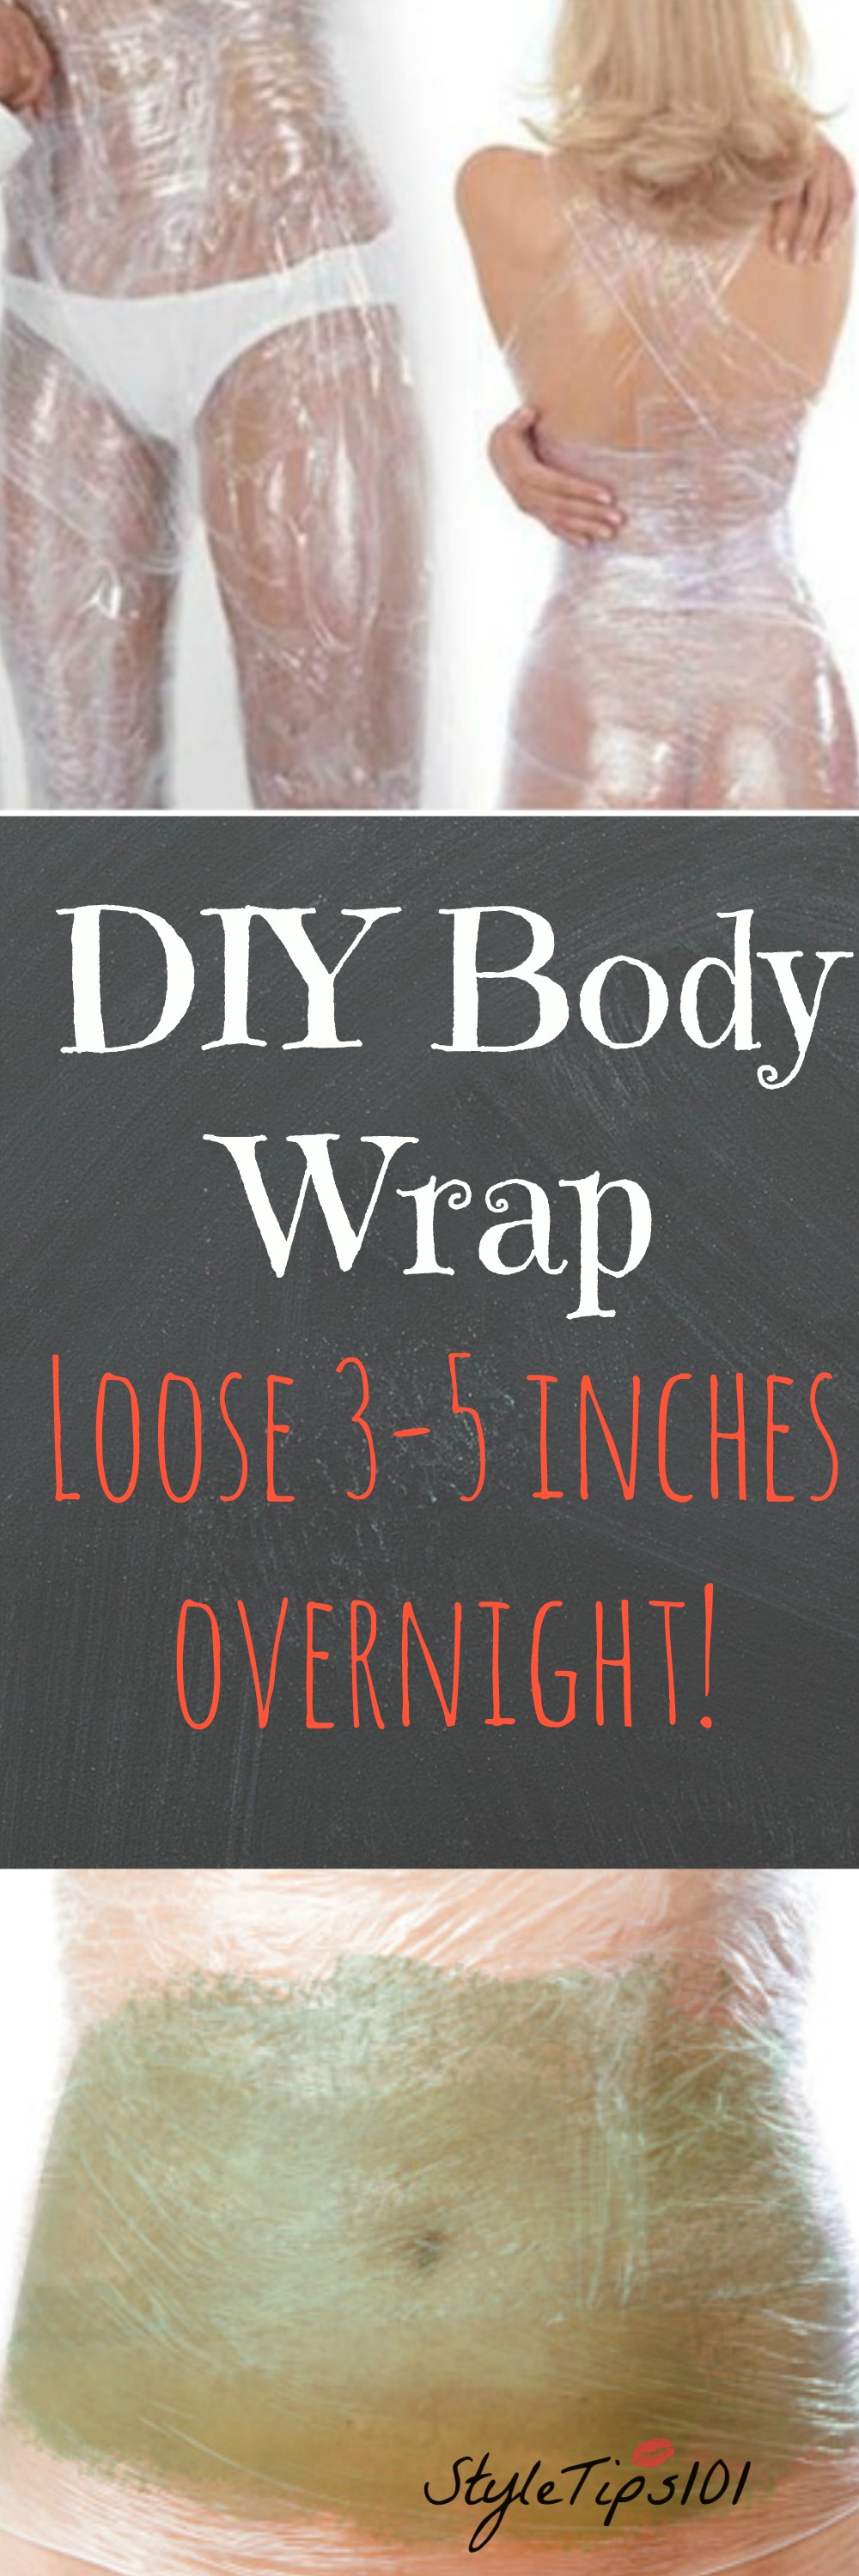 DIY body wrap